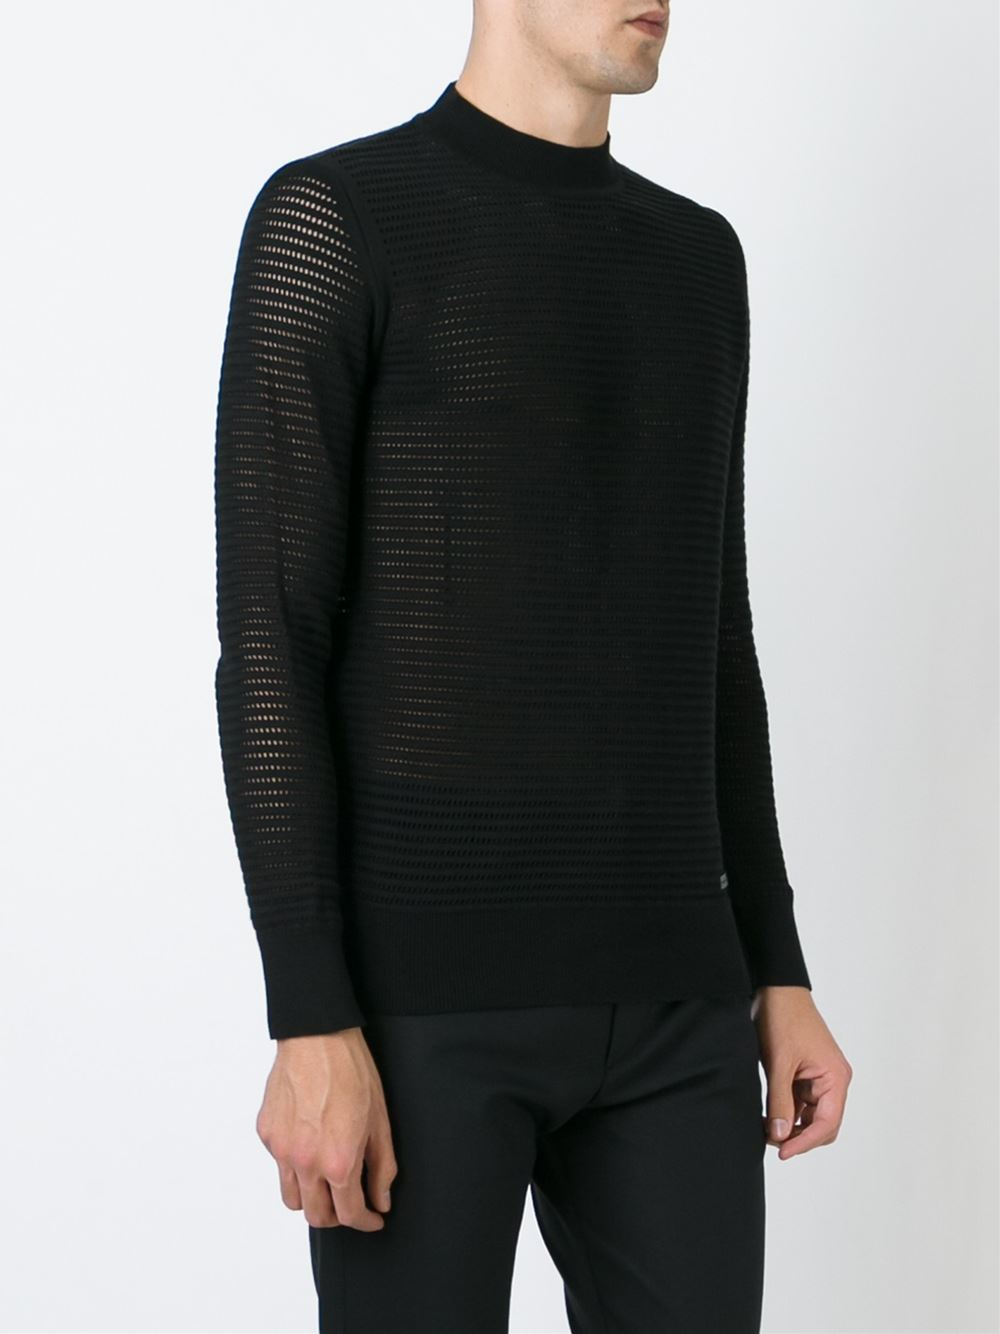 Lyst - Diesel Black Gold Mesh Stripe Sweater in Black for Men